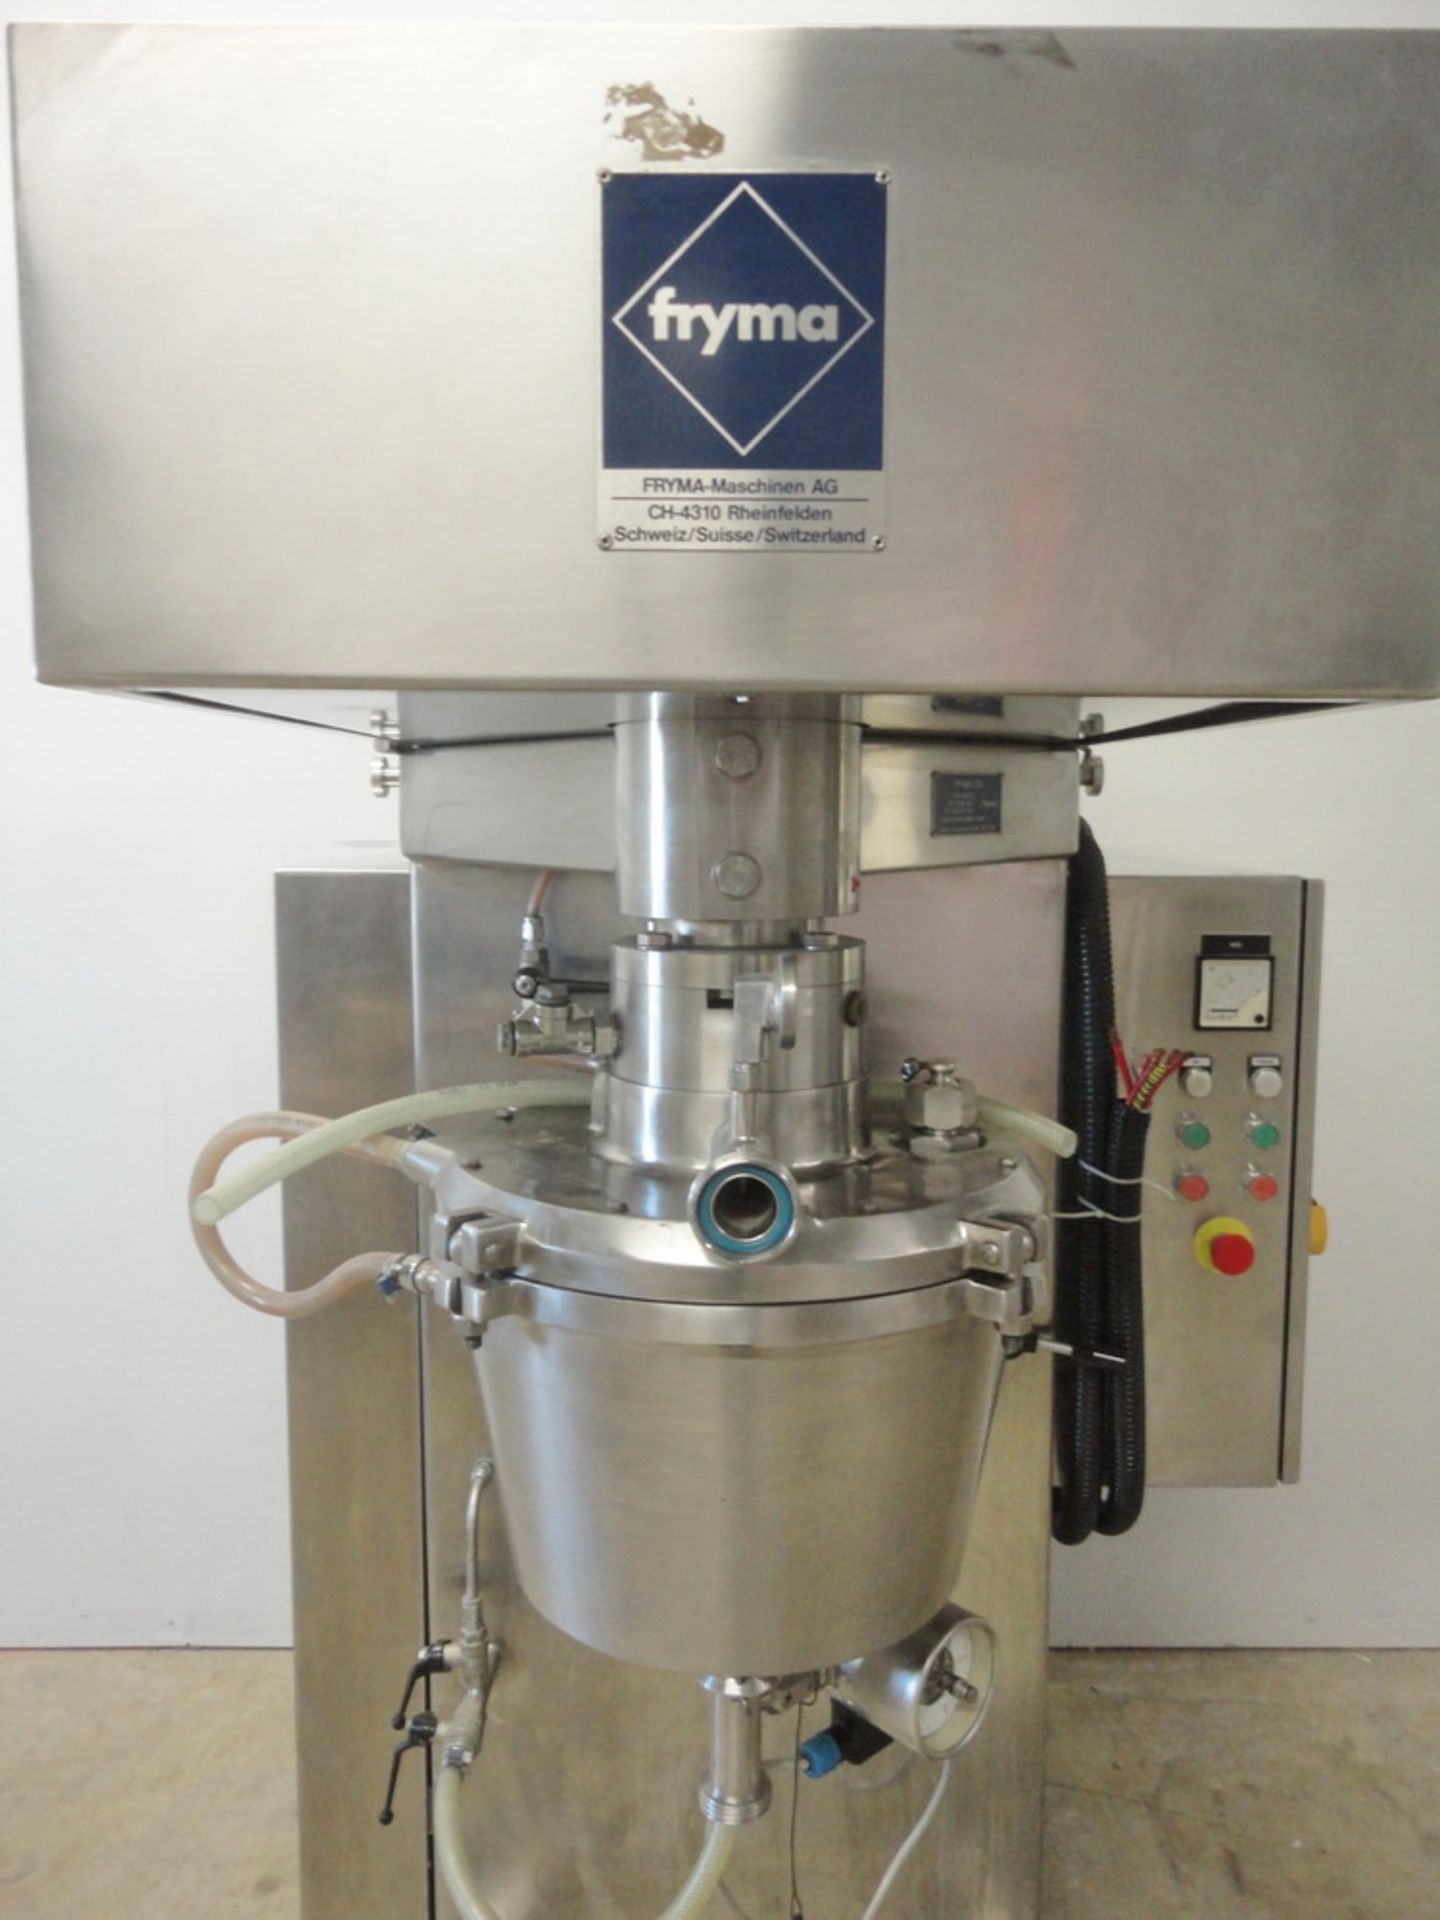 Fryma (Romaco) (Koruma) Stainless Steel Bead CoBall grinding mill, model MS-32, S/N M16192. - Image 3 of 14